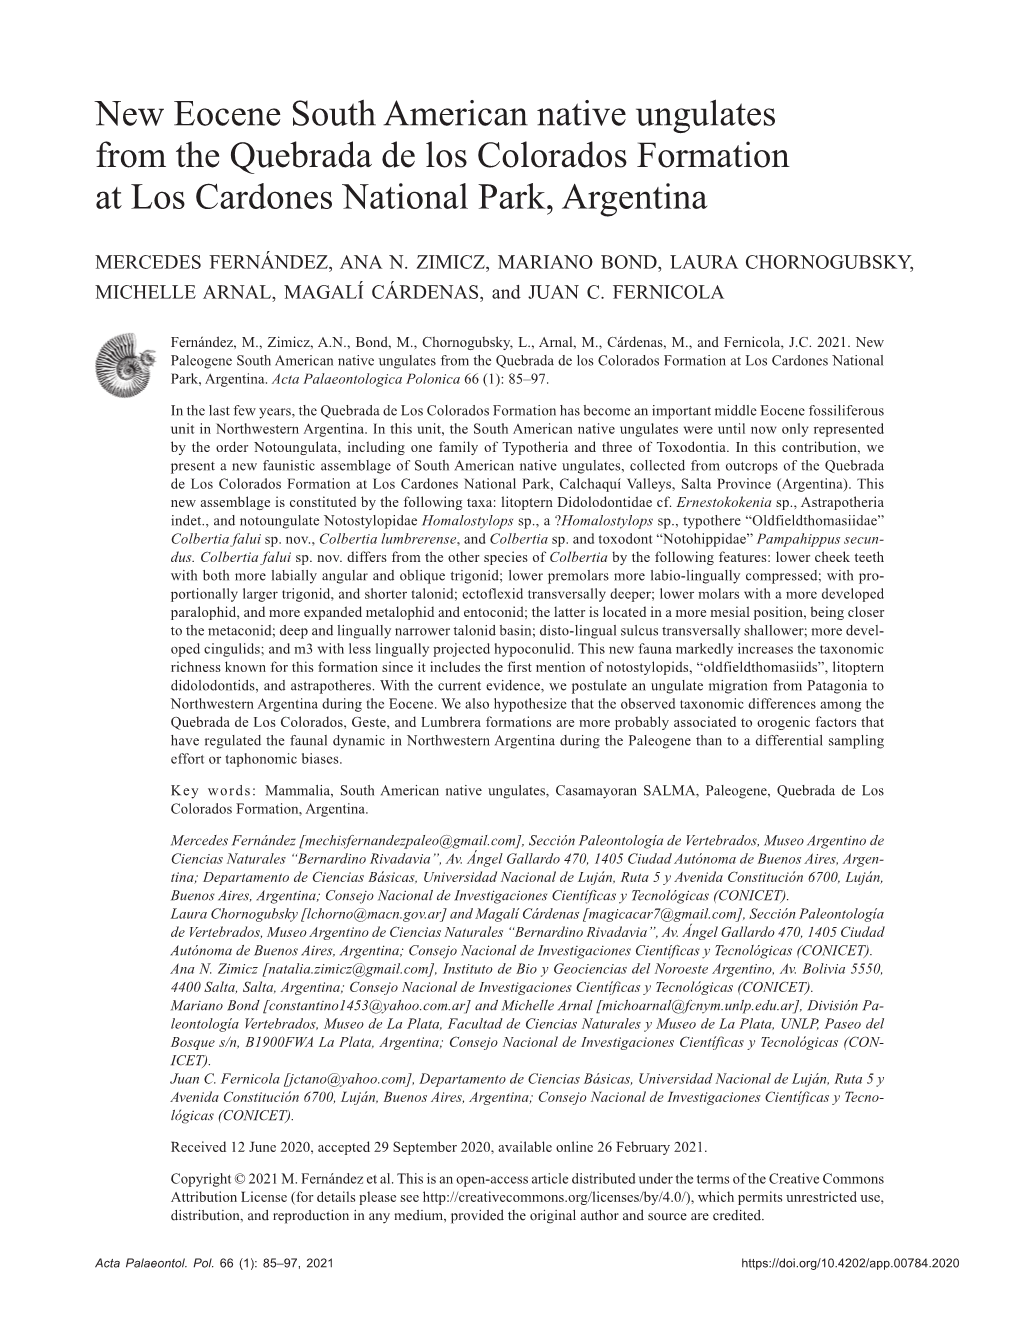 New Eocene South American Native Ungulates from the Quebrada De Los Colorados Formation at Los Cardones National Park, Argentina